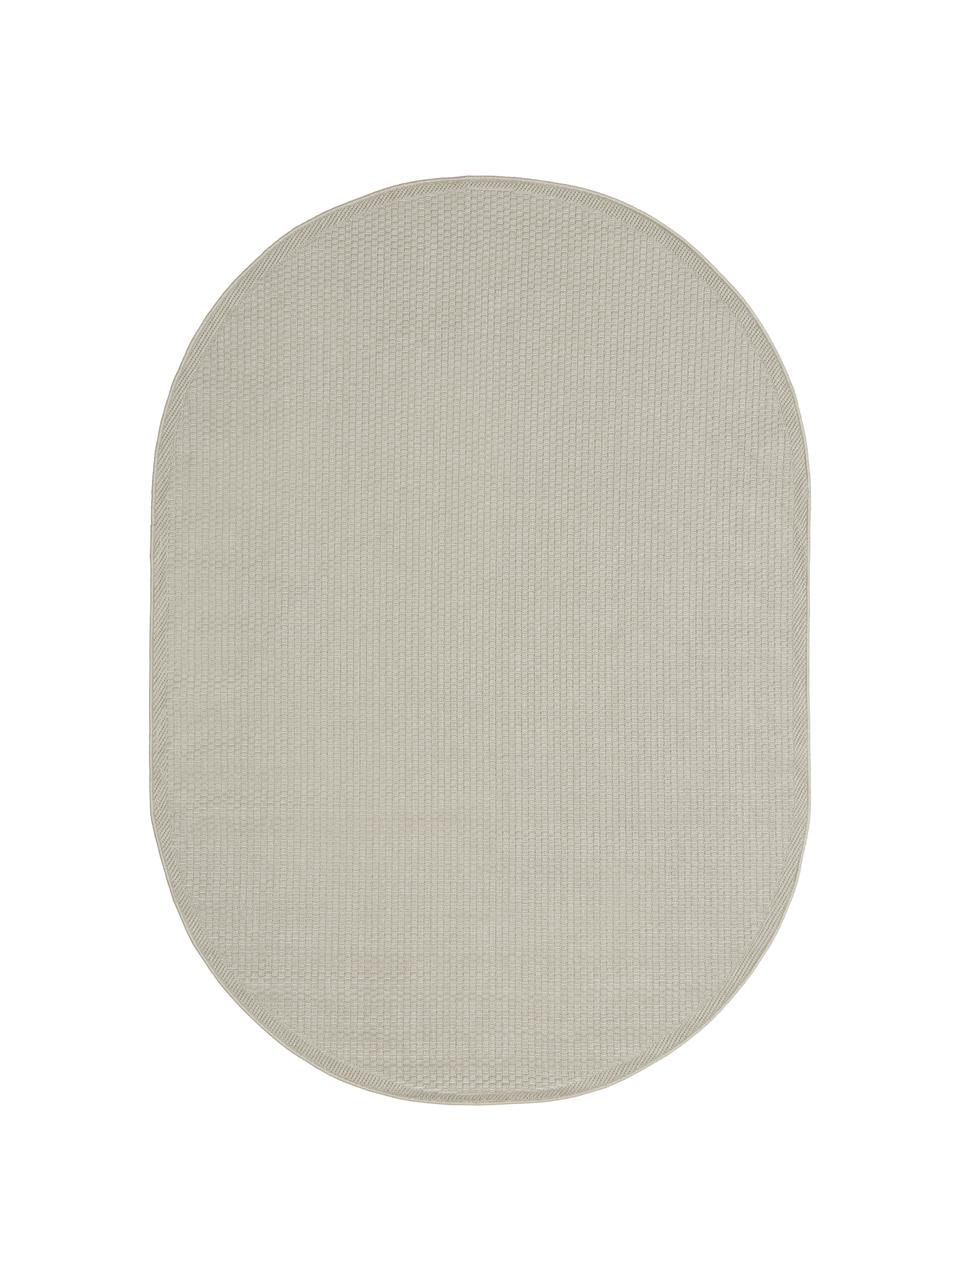 Tappeto ovale da interno-esterno color beige Toronto, 100% polipropilene, Beige, Larg. 200 x Lung. 300 cm (taglia L)